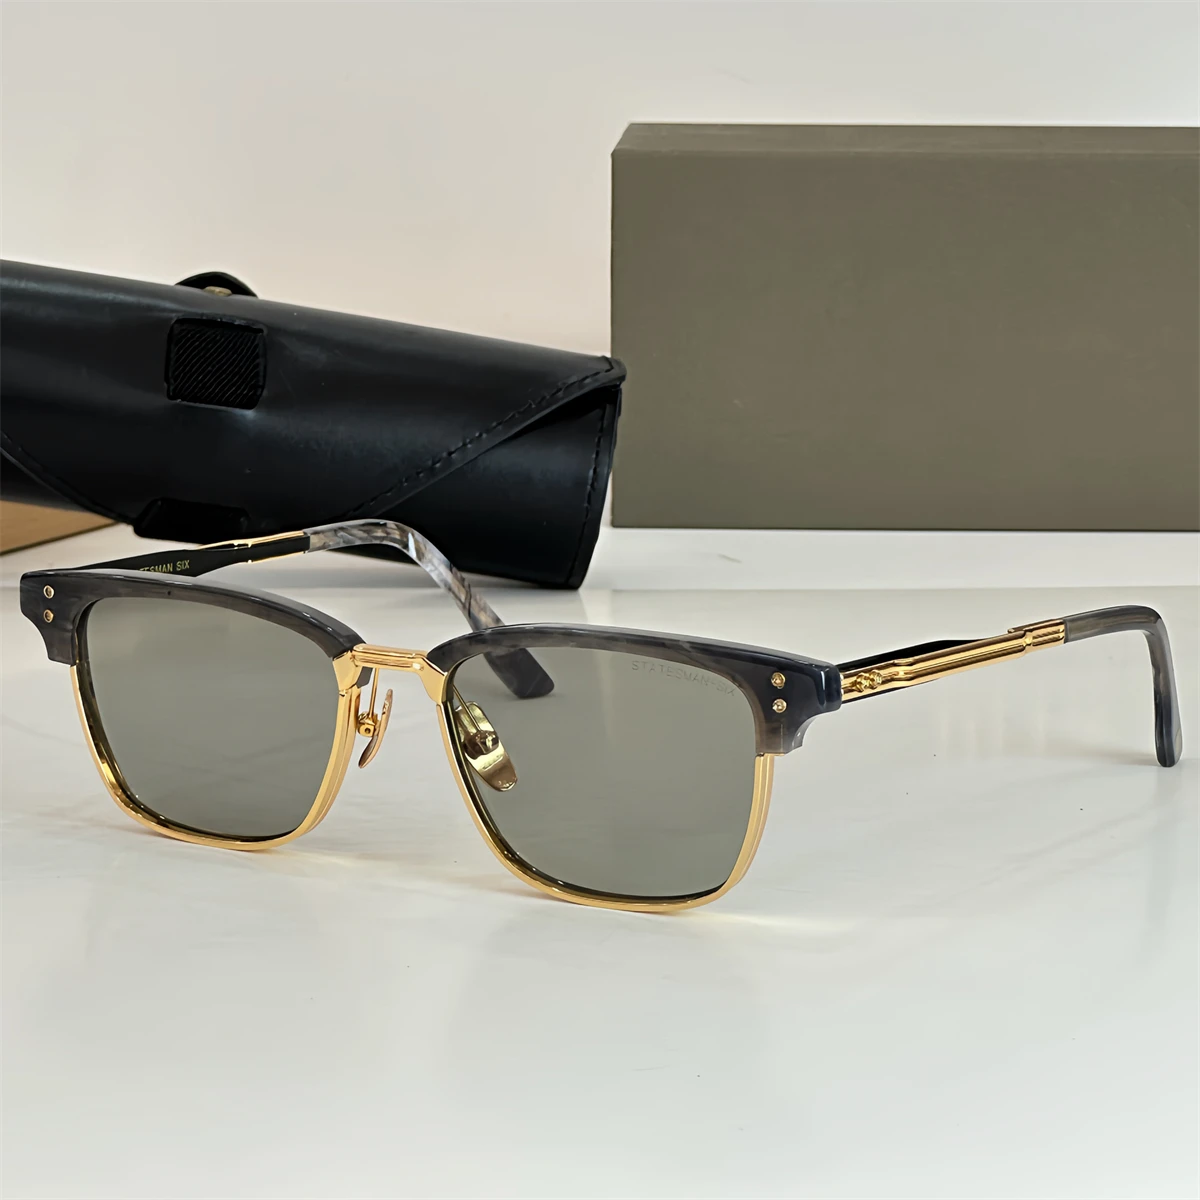 

ADITA Statesman-Six DT132 SIZE 52-18-145 Top High Quality Sunglasses for Men Titanium Fashion Design Womens Sunglasses with box